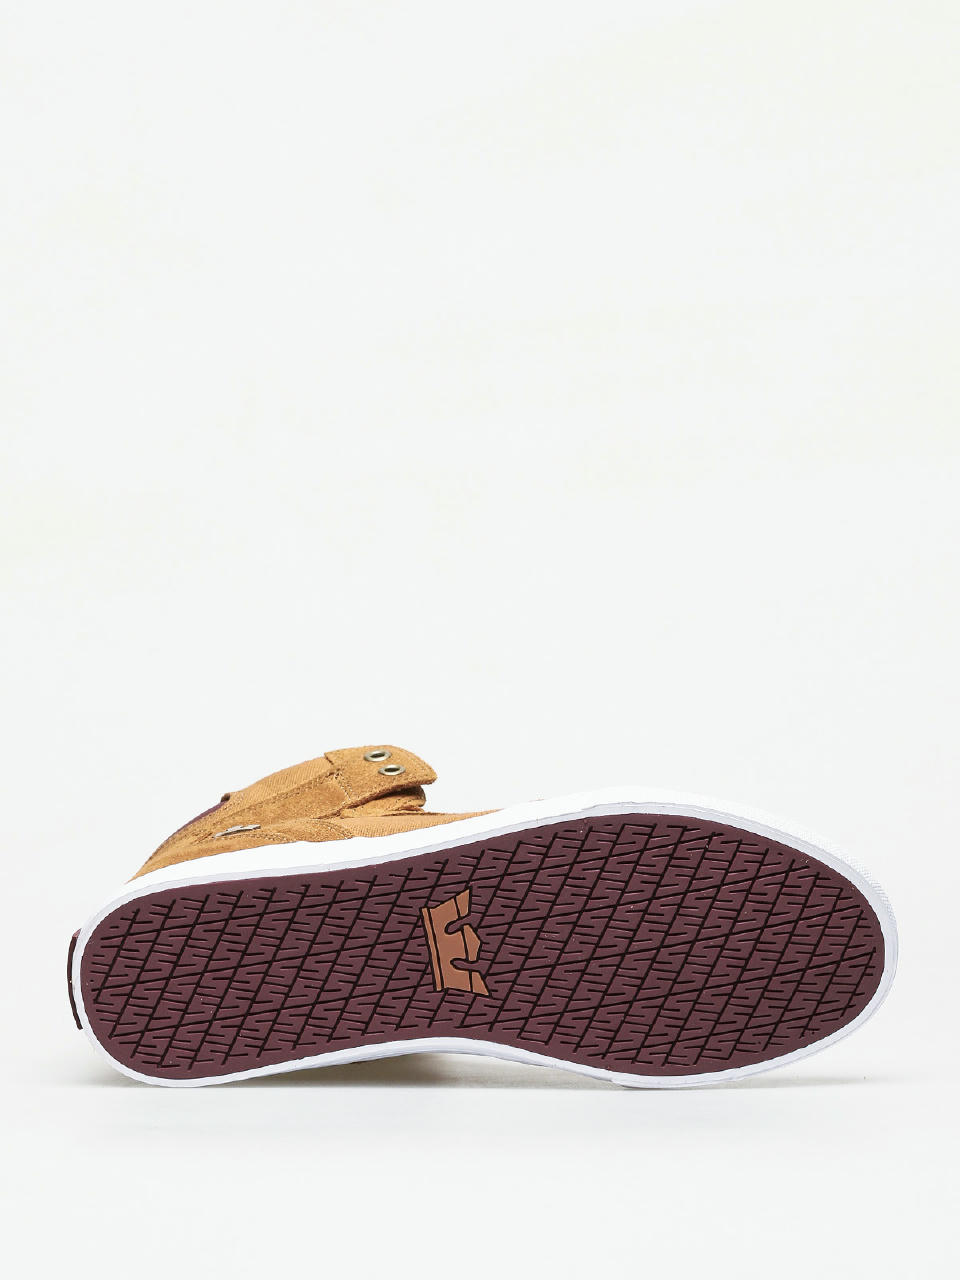 Supra Men's Vaider Hi Top Sneaker Shoes Tan/Wine-White Footwear Skateboarding...